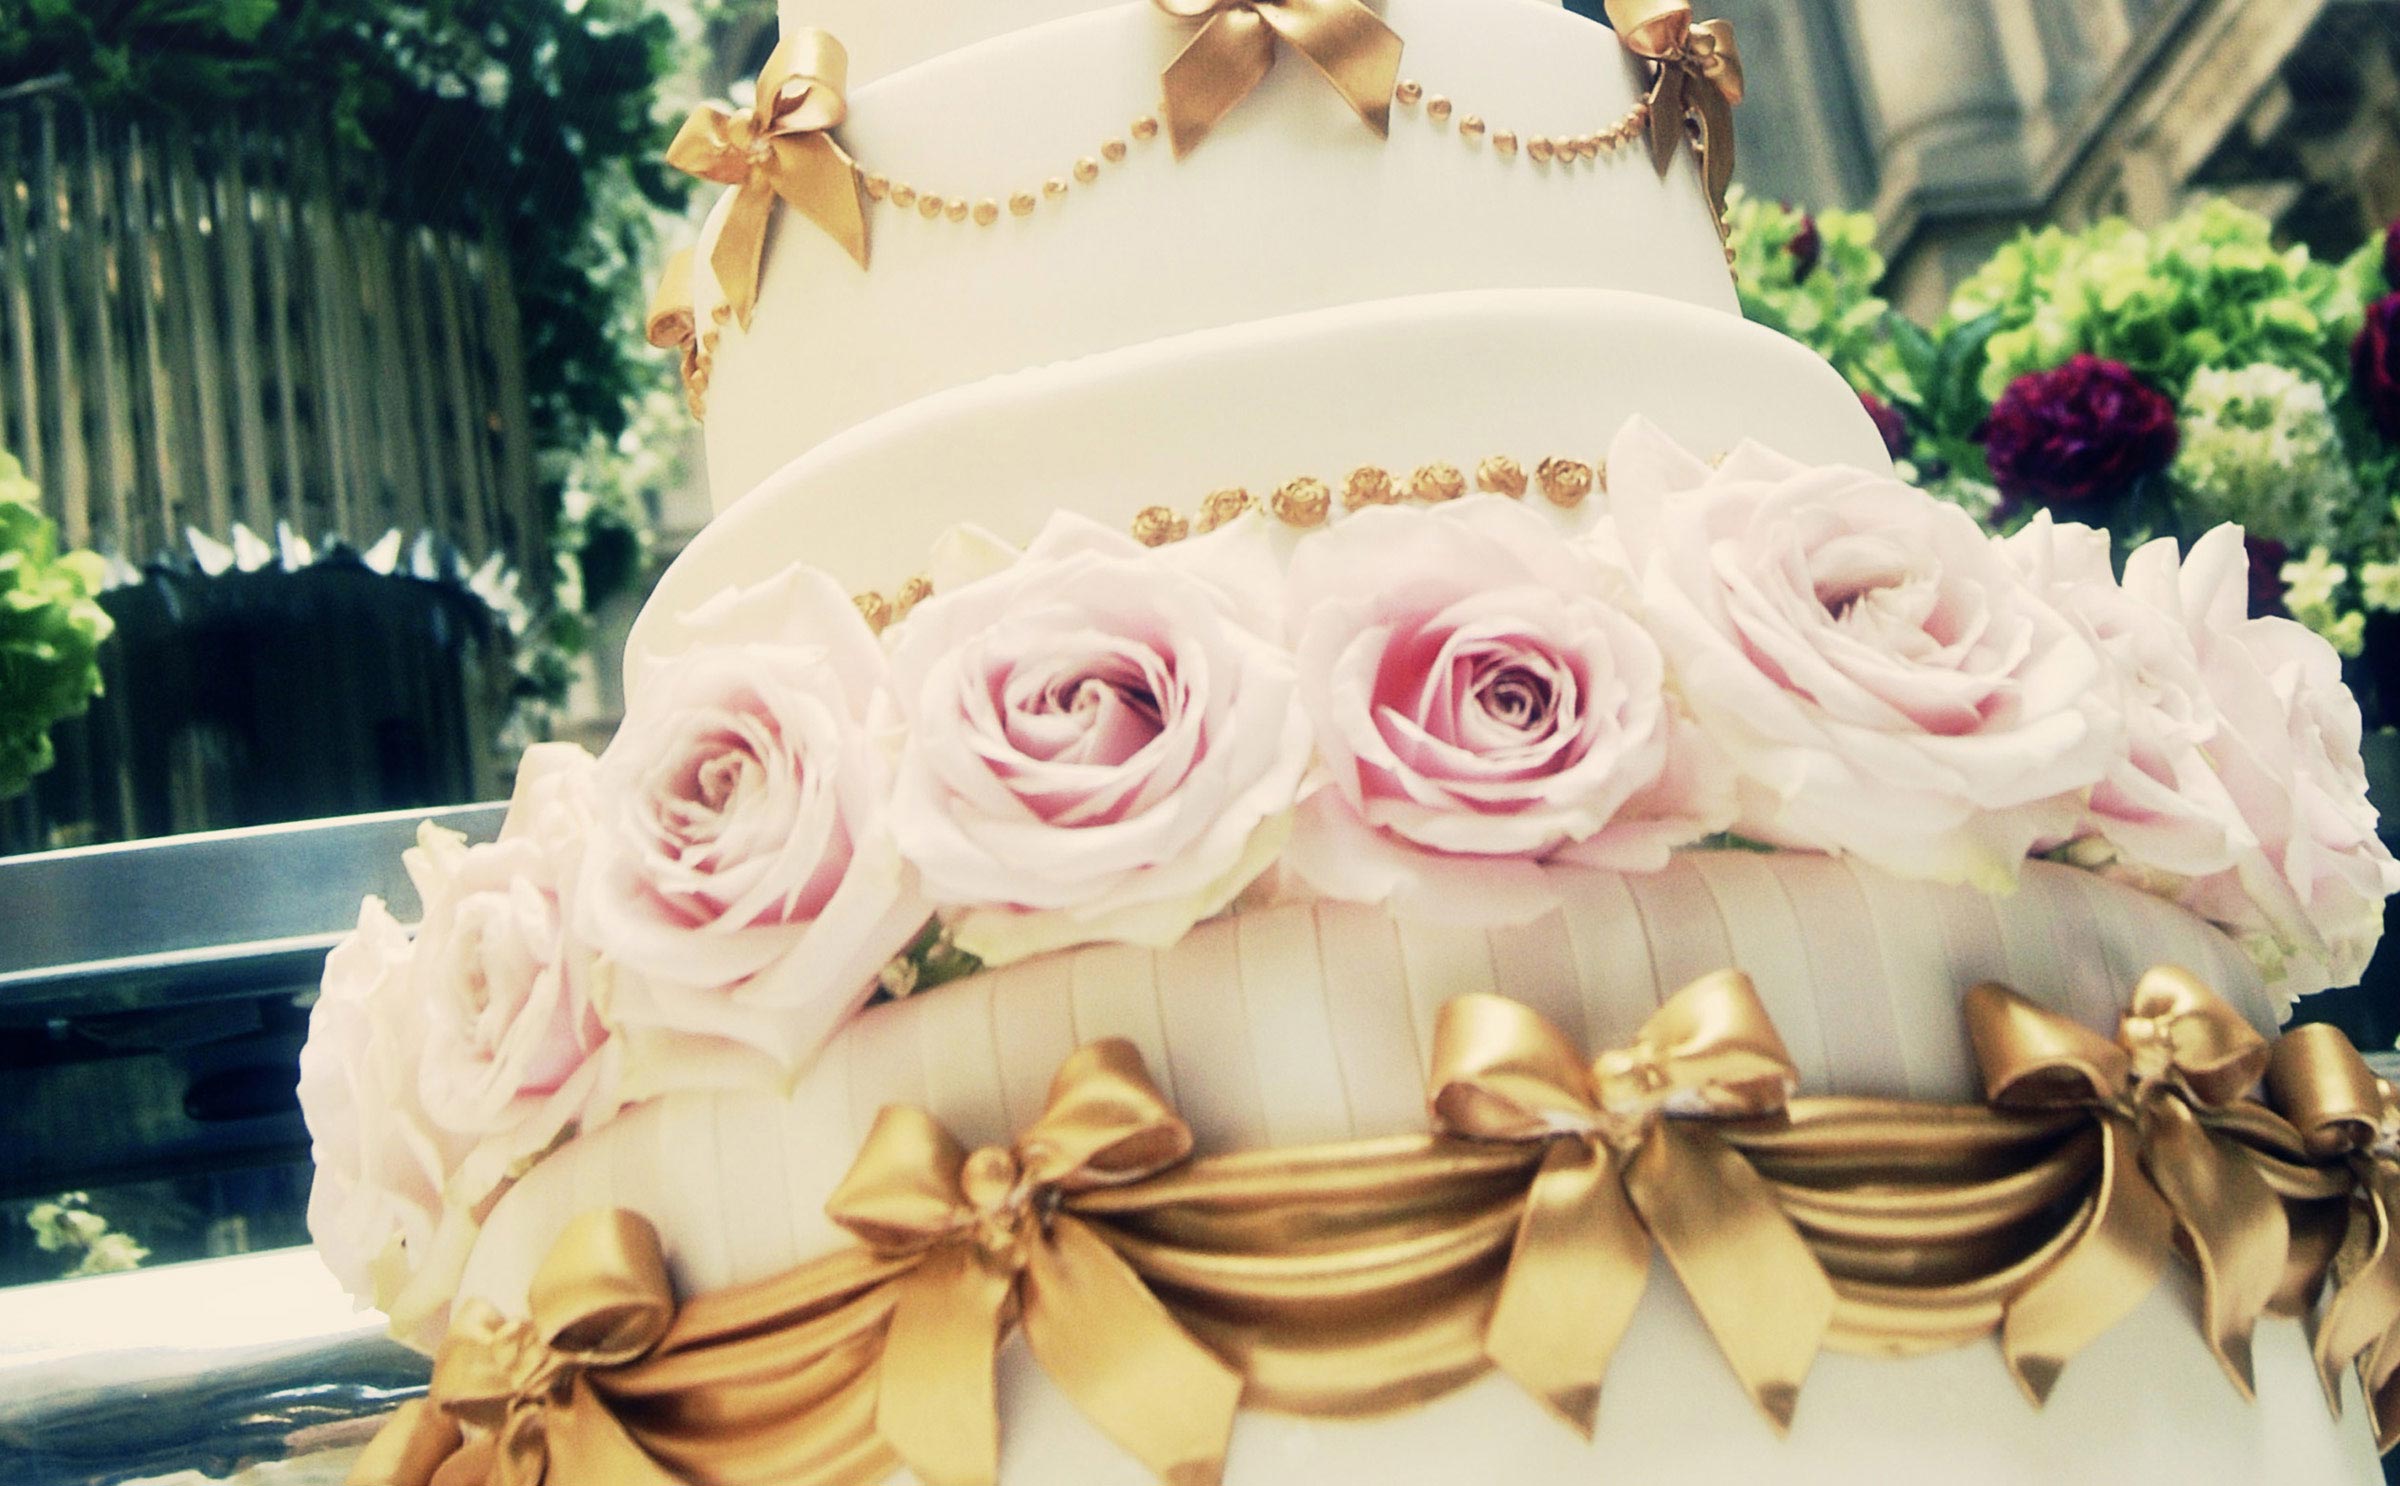 Wedding cake close up & detailing